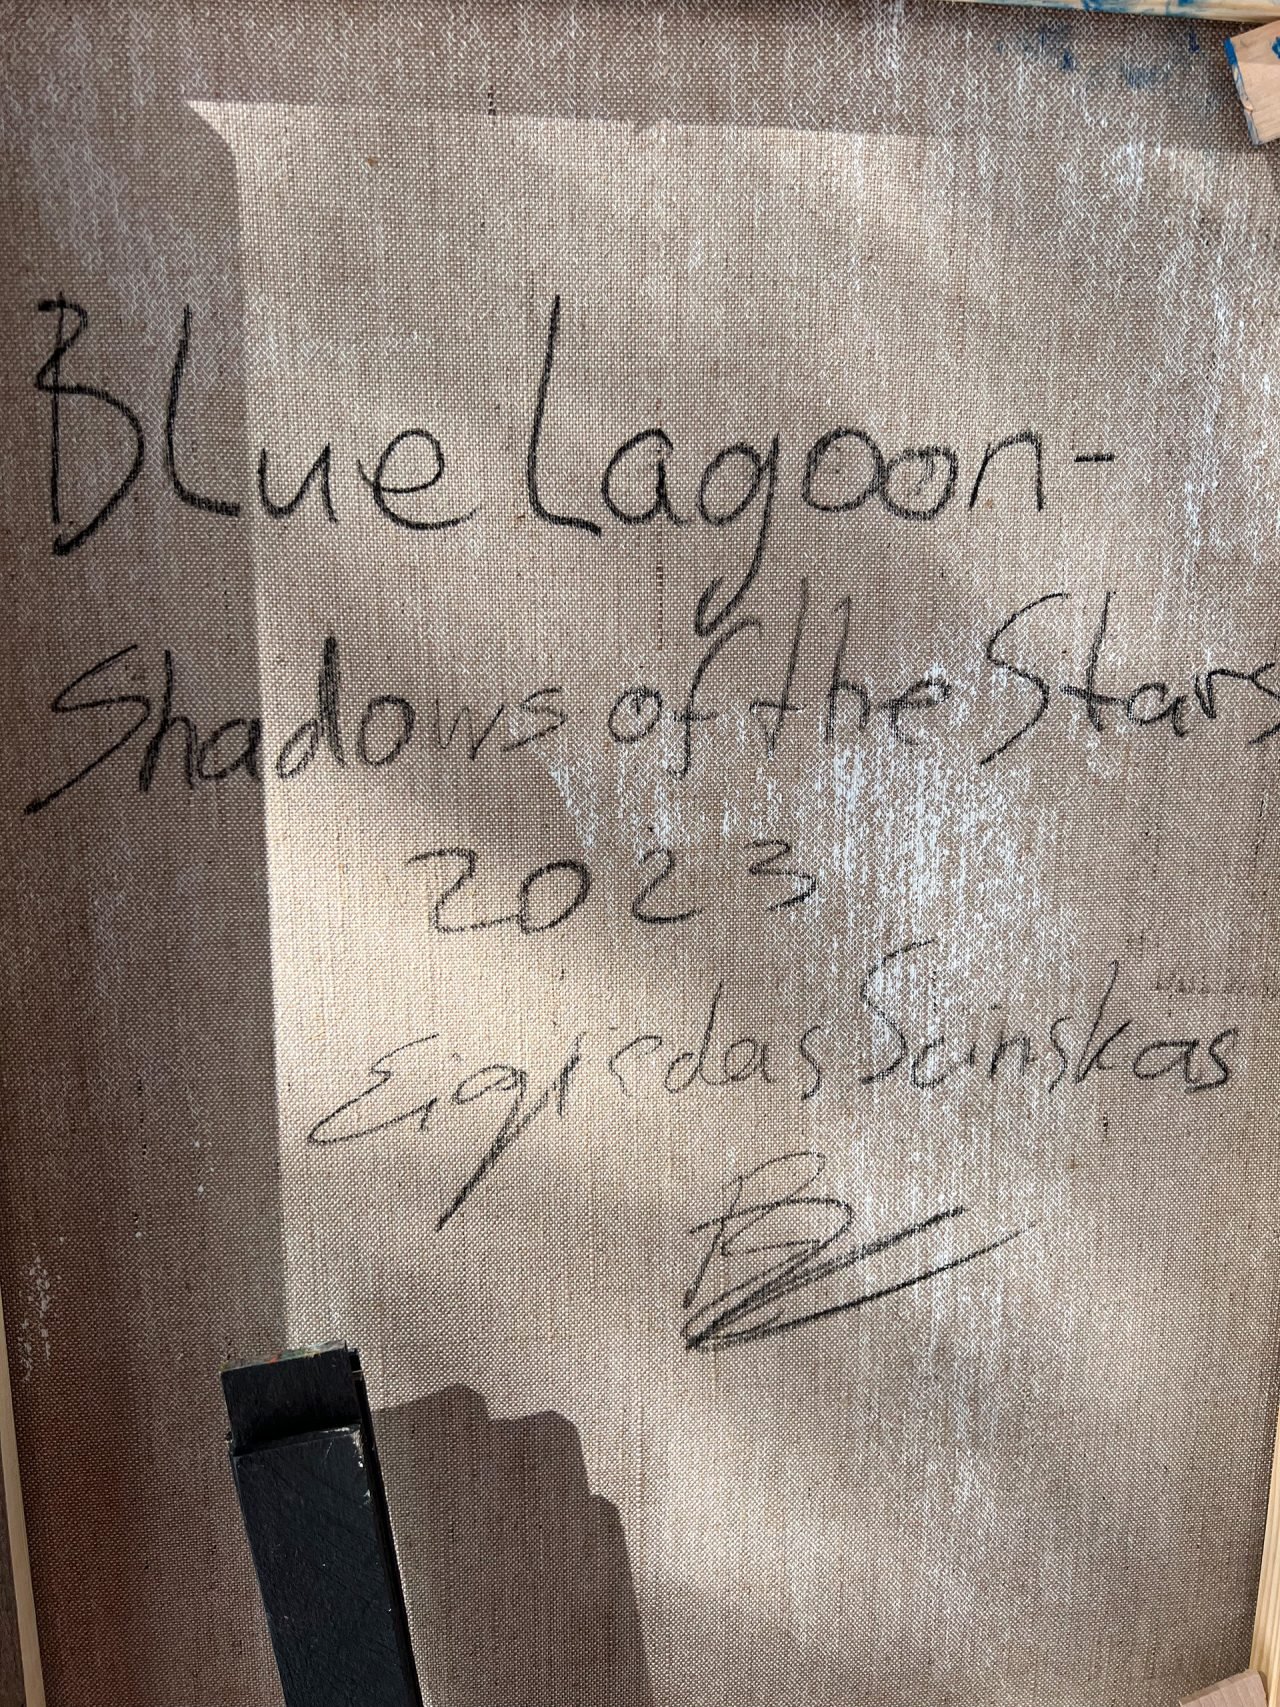 Blue Lagoon - Shadows of the Stars